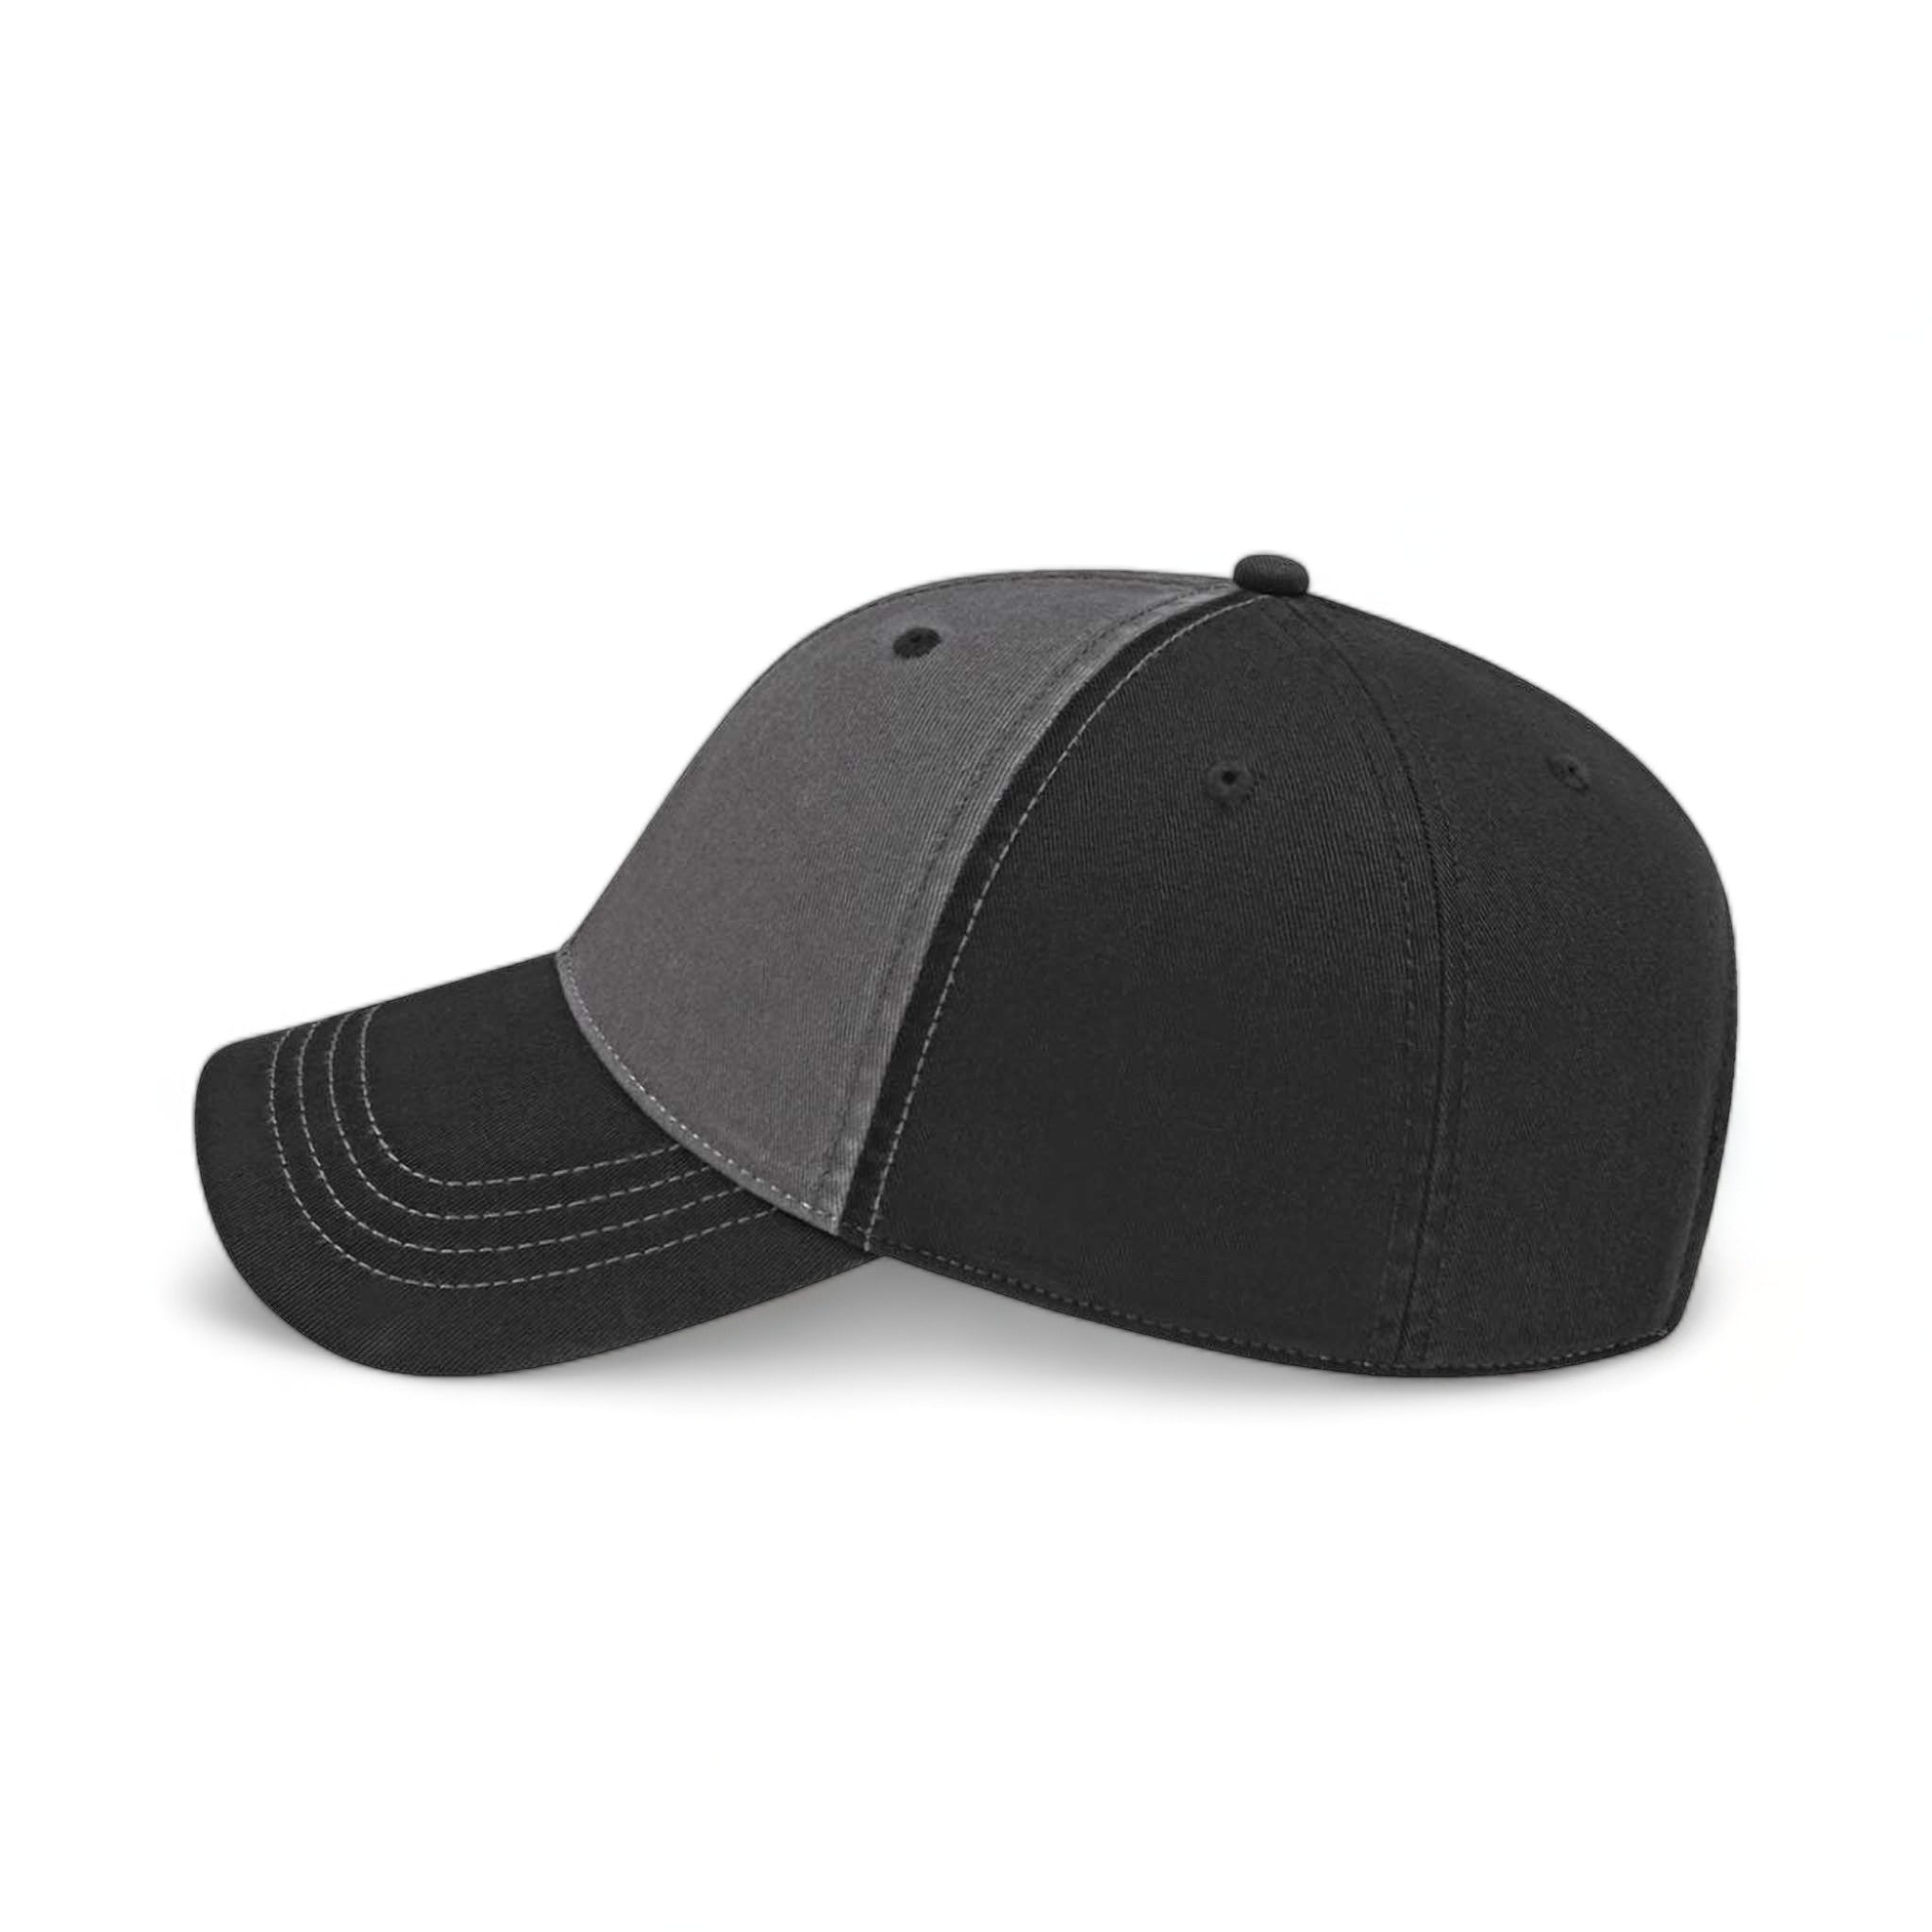 Side view of CAP AMERICA i1002 custom hat in dark grey and black